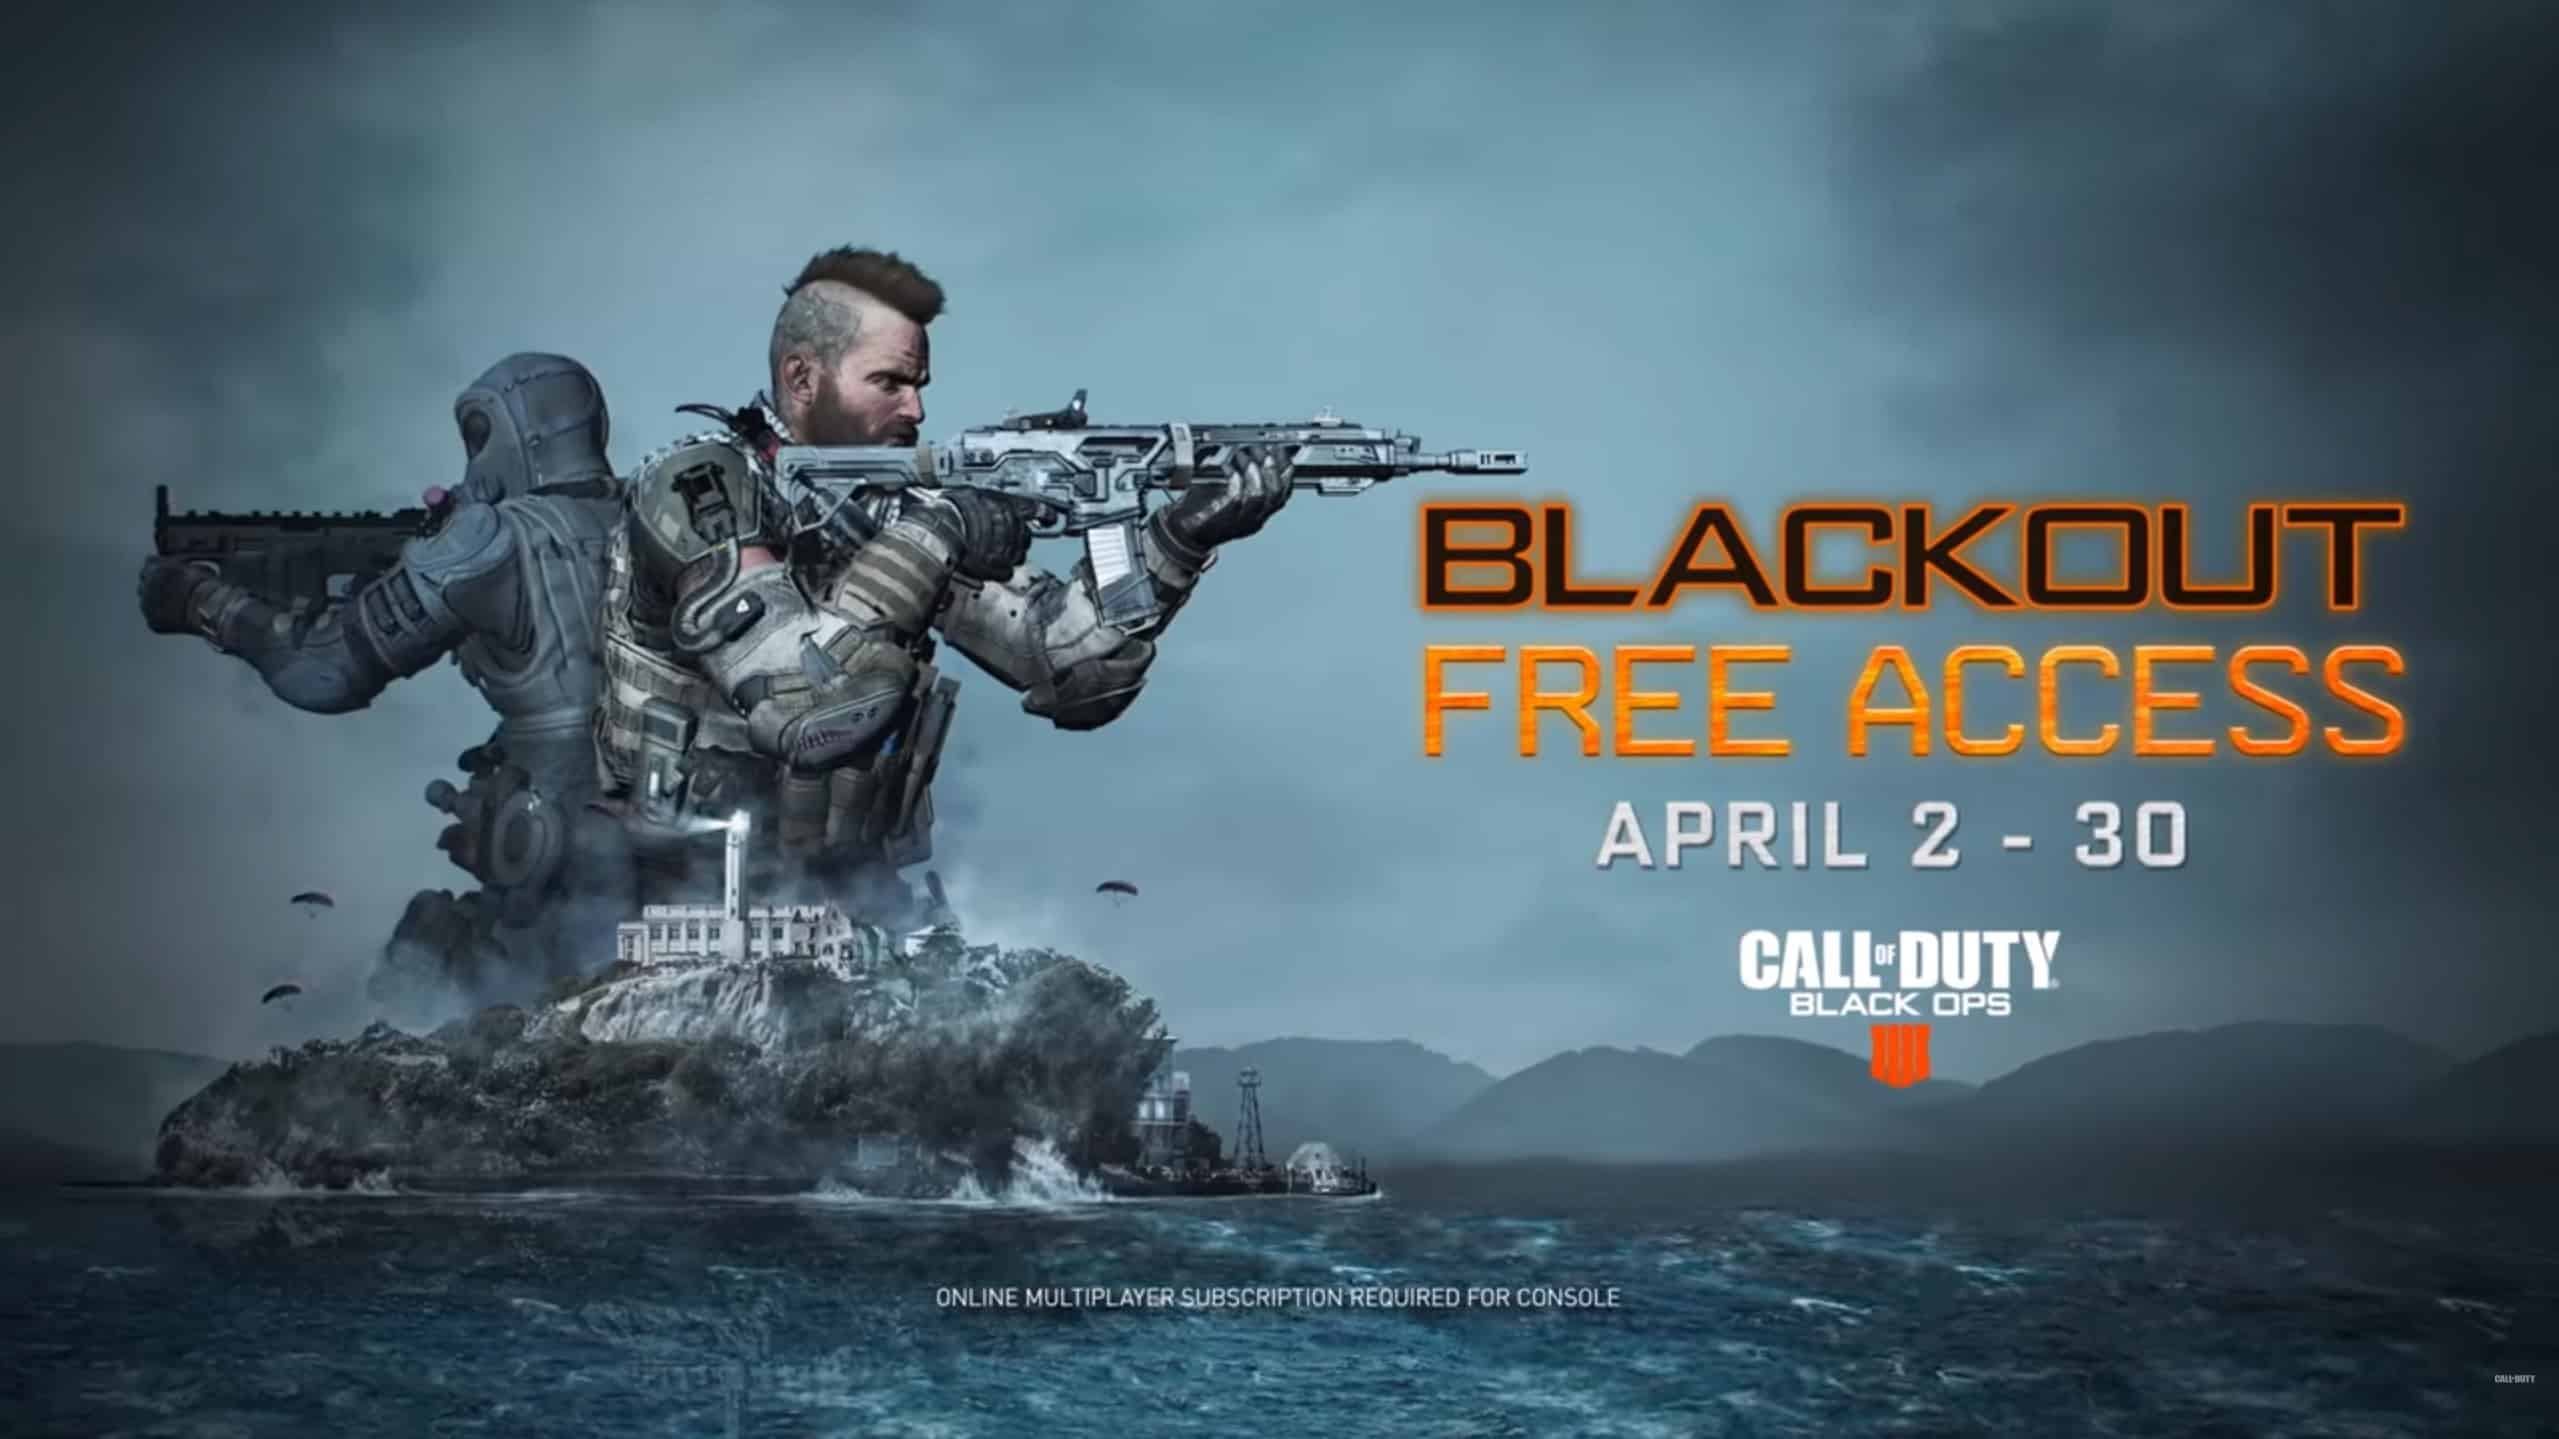 Free Access April Blackout